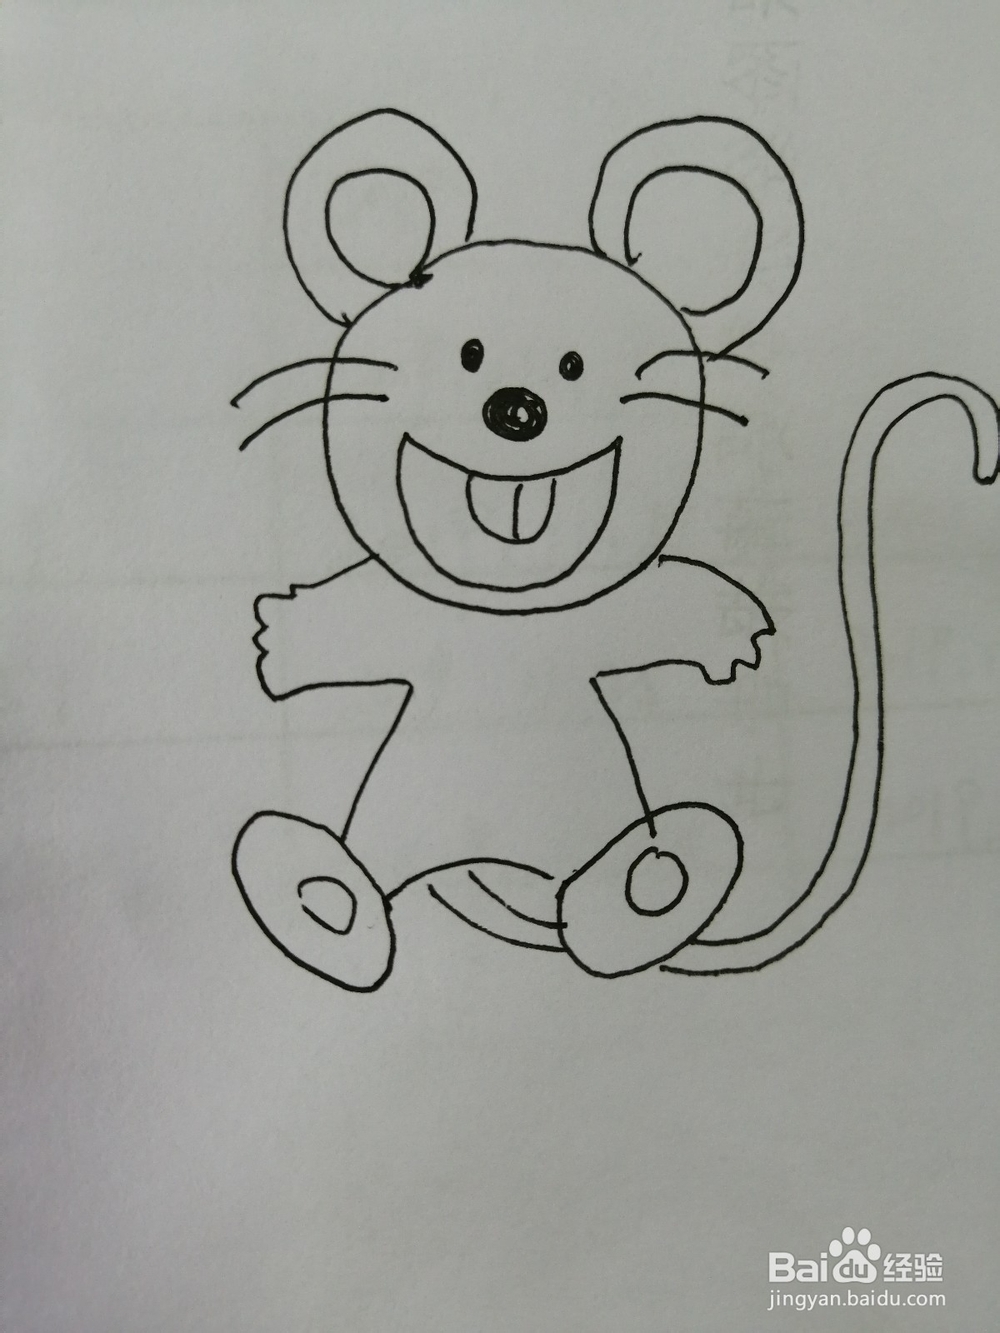 <b>露出牙齿的可爱小老鼠怎么画</b>